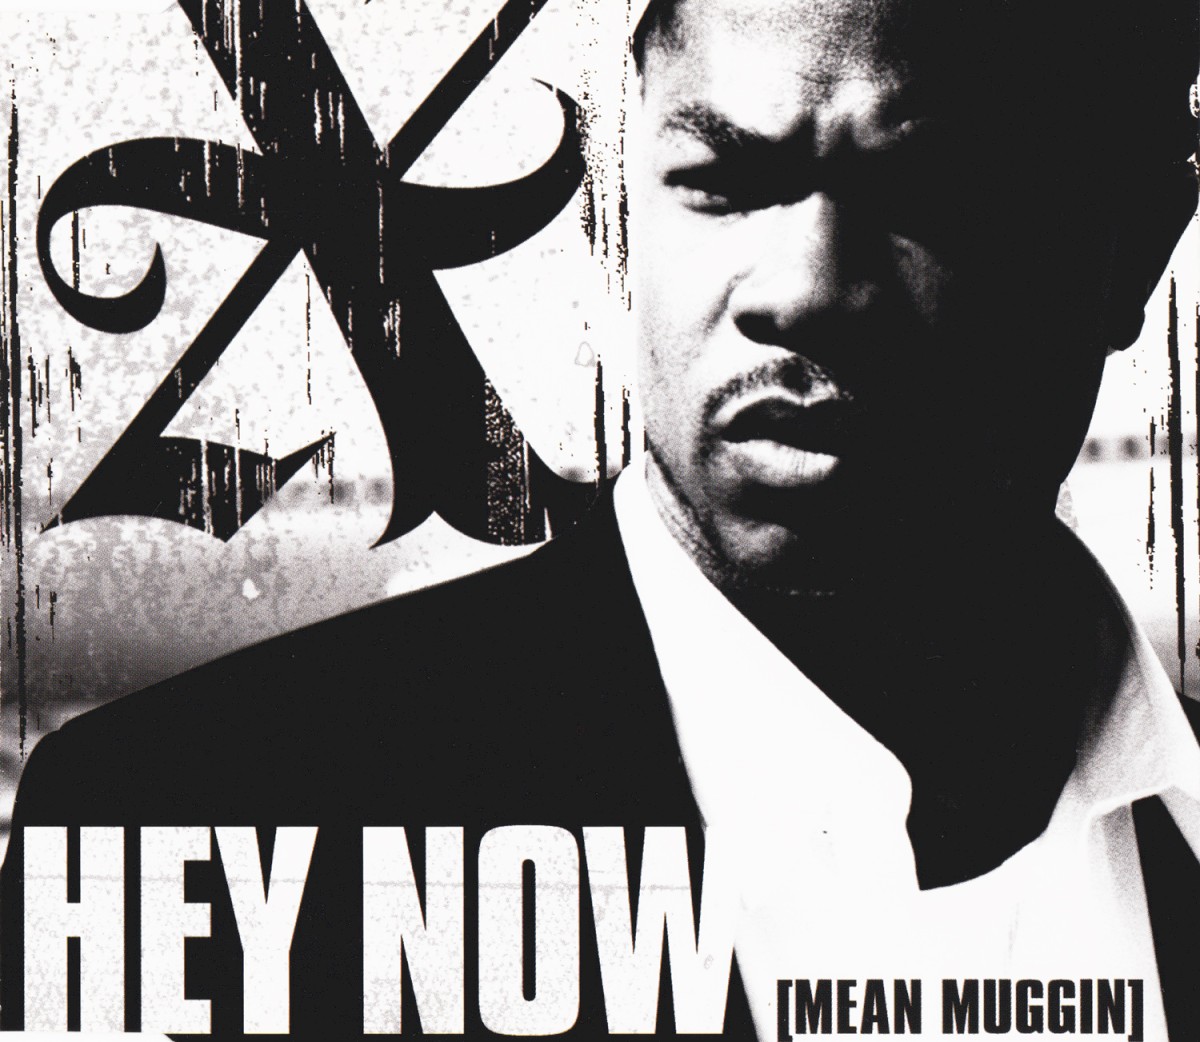 Xzibit featuring Keri Hilson — Hey Now (Mean Muggin) cover artwork